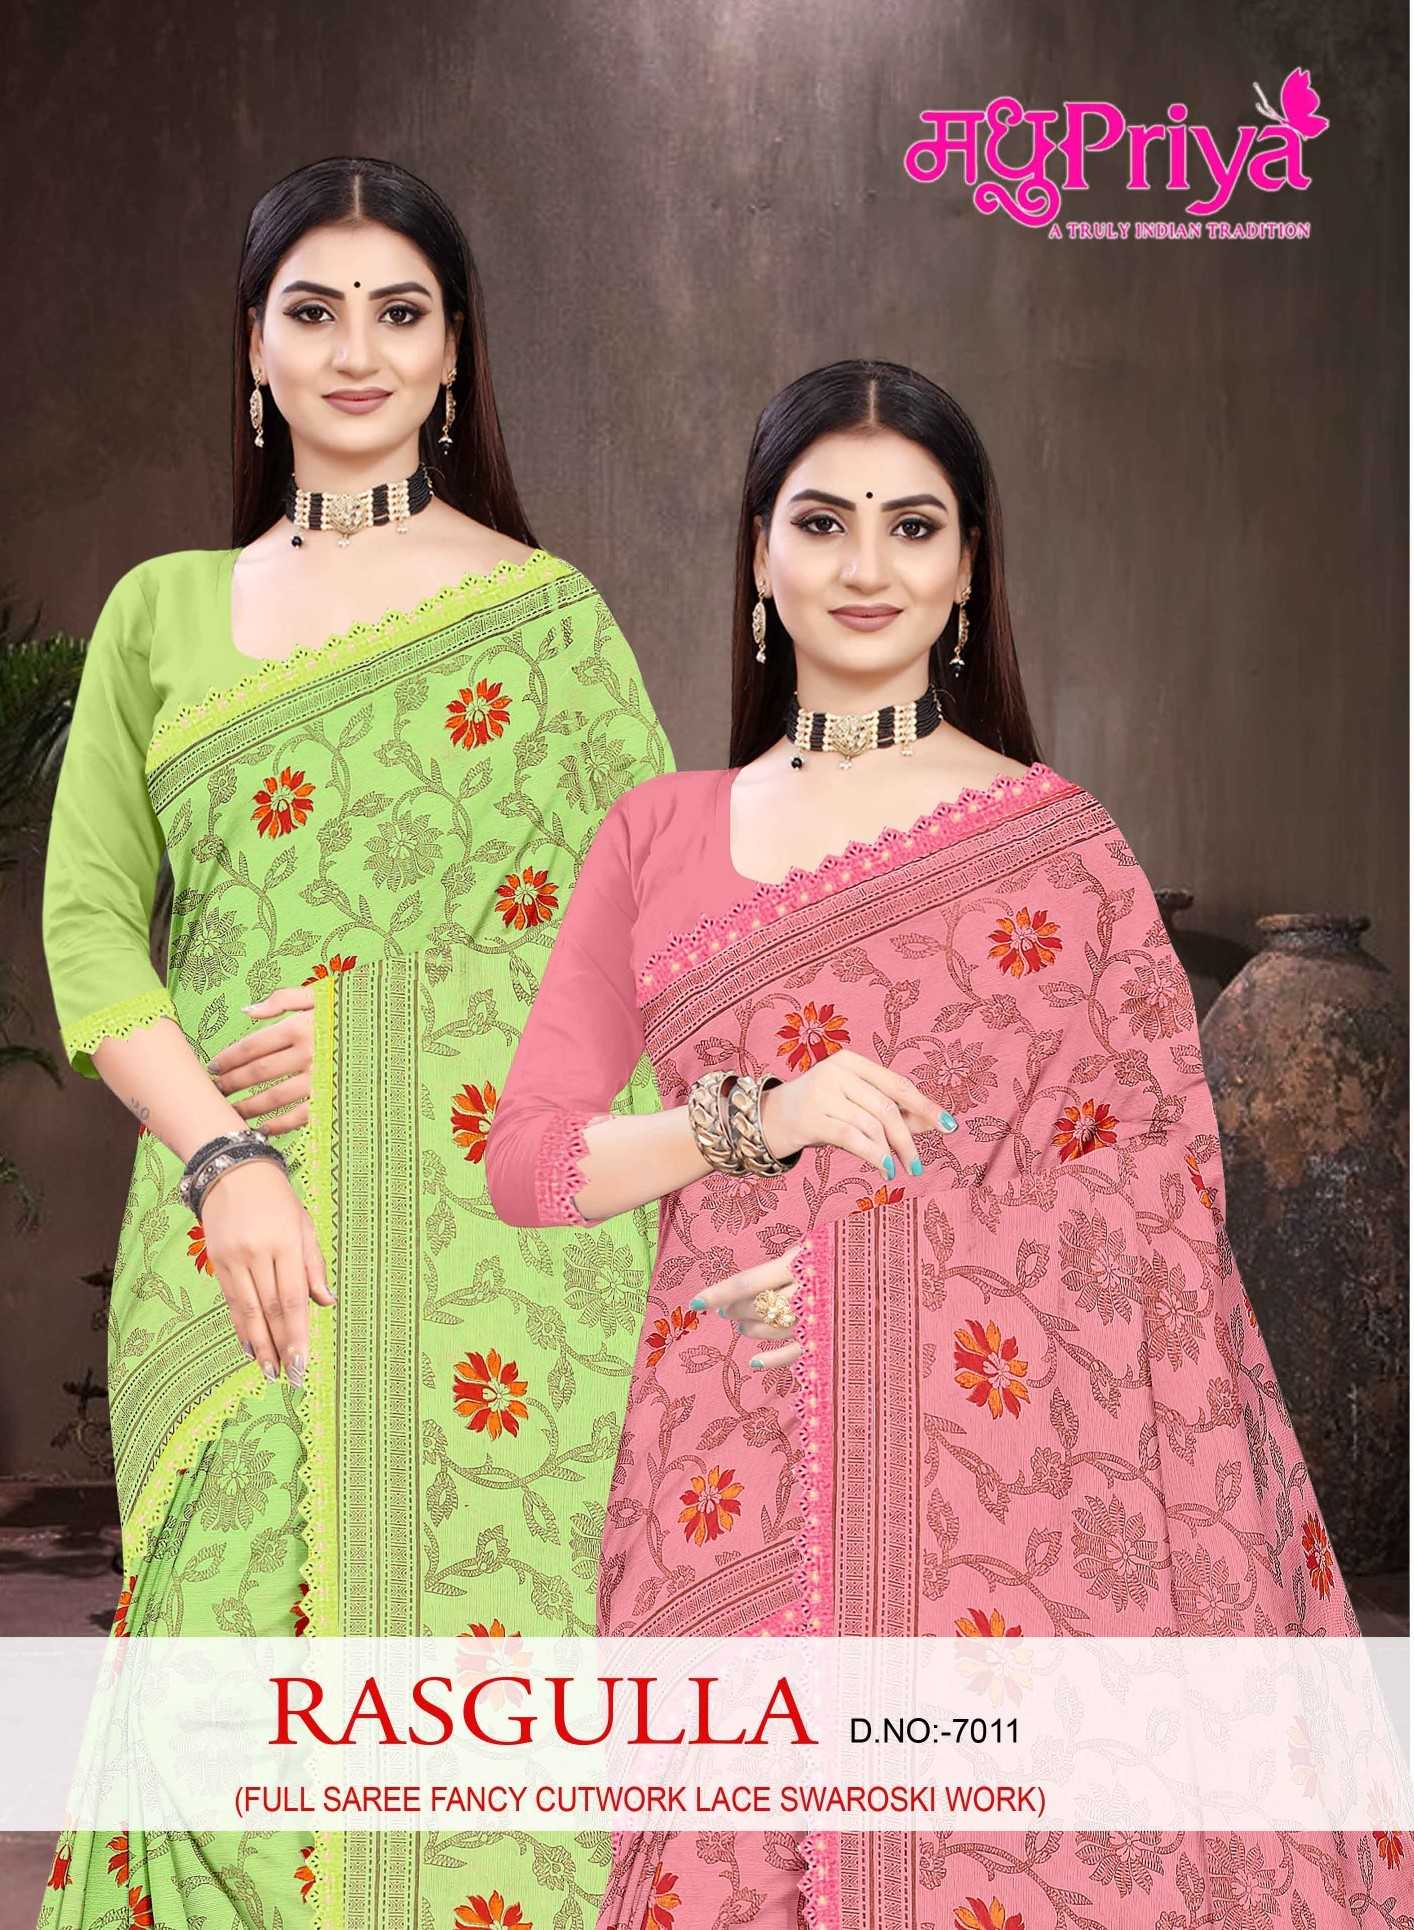 madhupriya rasgulla 7011 fancy chiffon casual wear sarees trader